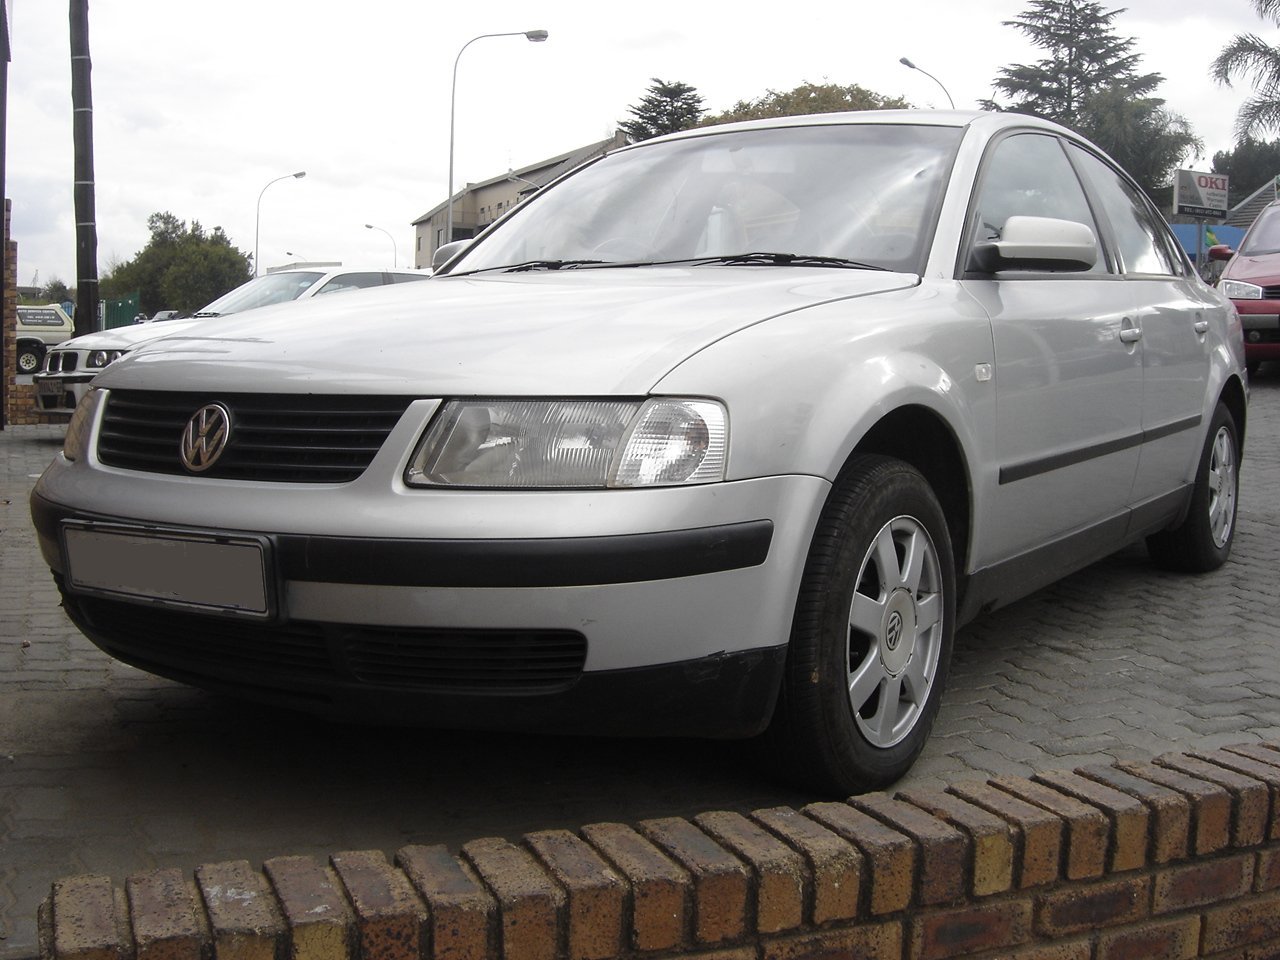 VW Passat 2001 1.8